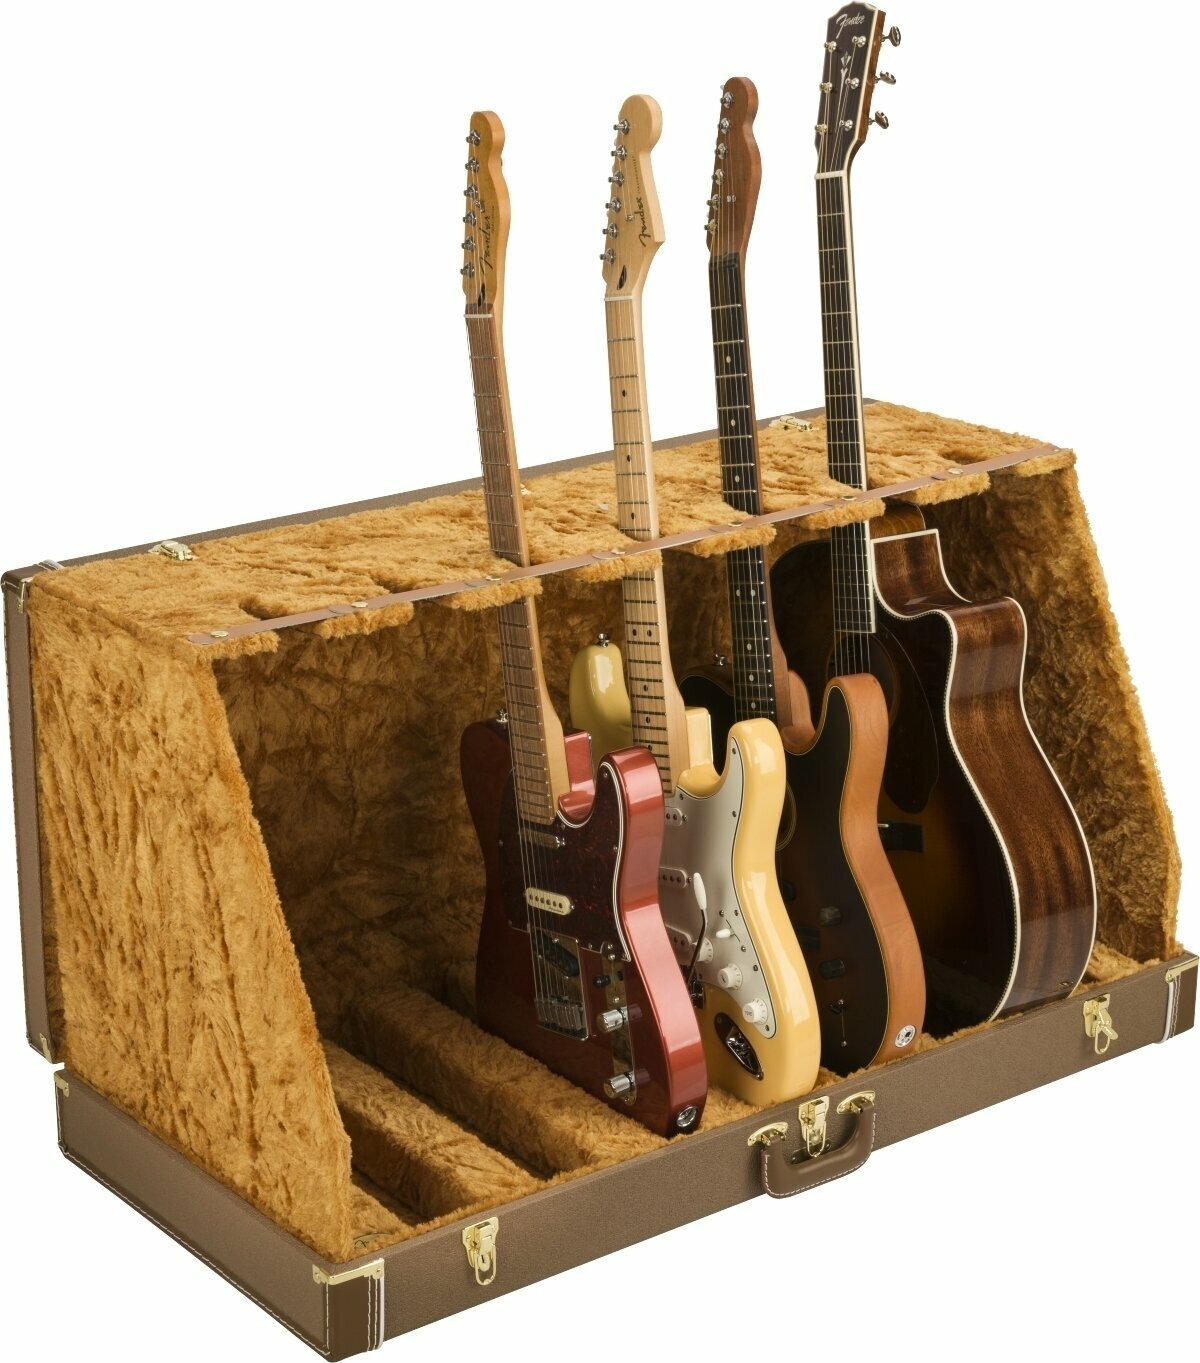 Fender Classic Series Case Stand 7 Brown Stojan pro více kytar Fender